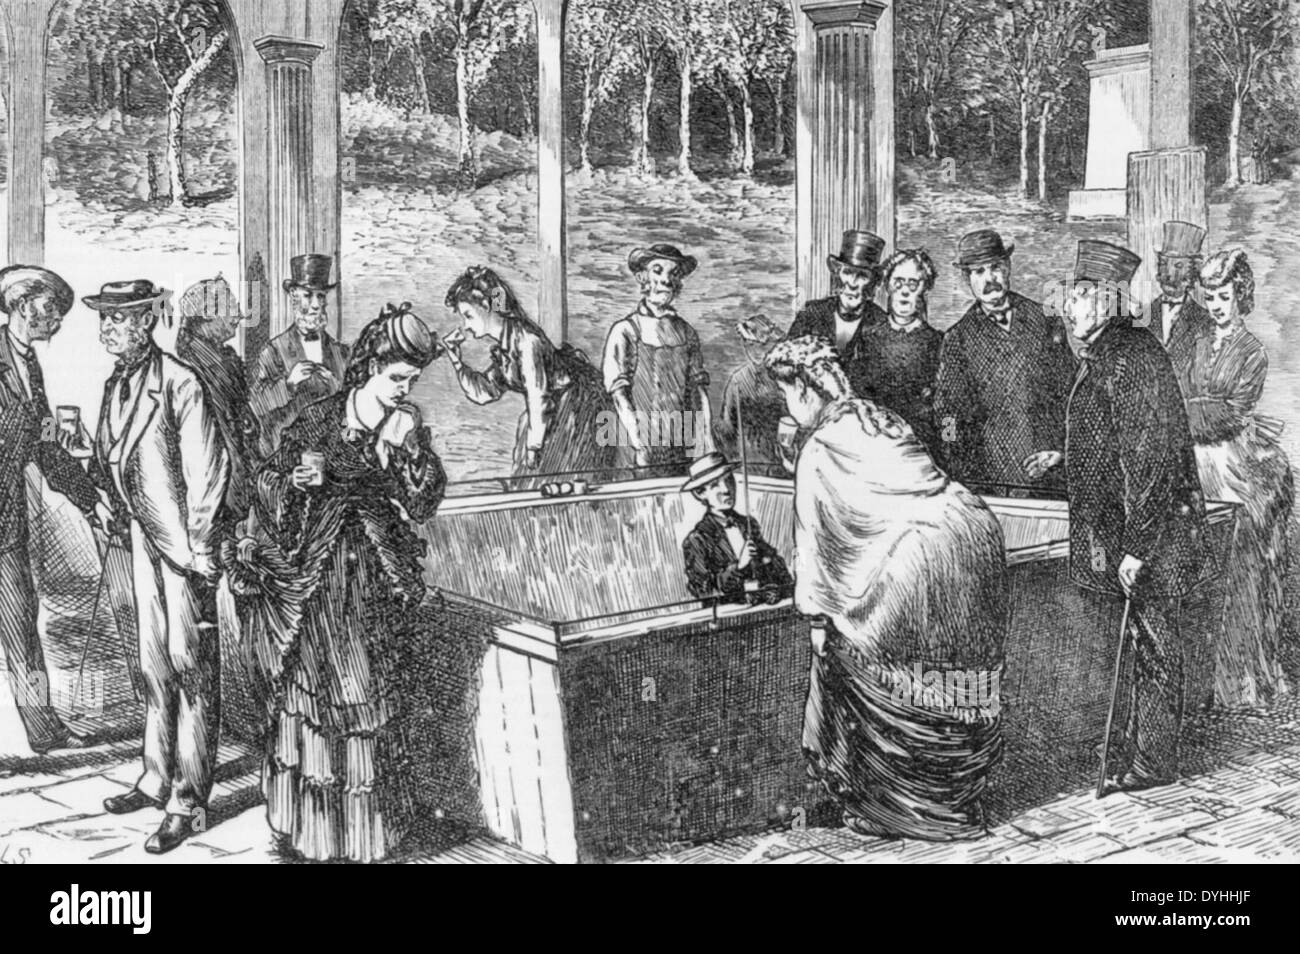 At Saratoga - Drinking at Congress Spring, Saratoga Springs, New York, 1871 Stock Photo